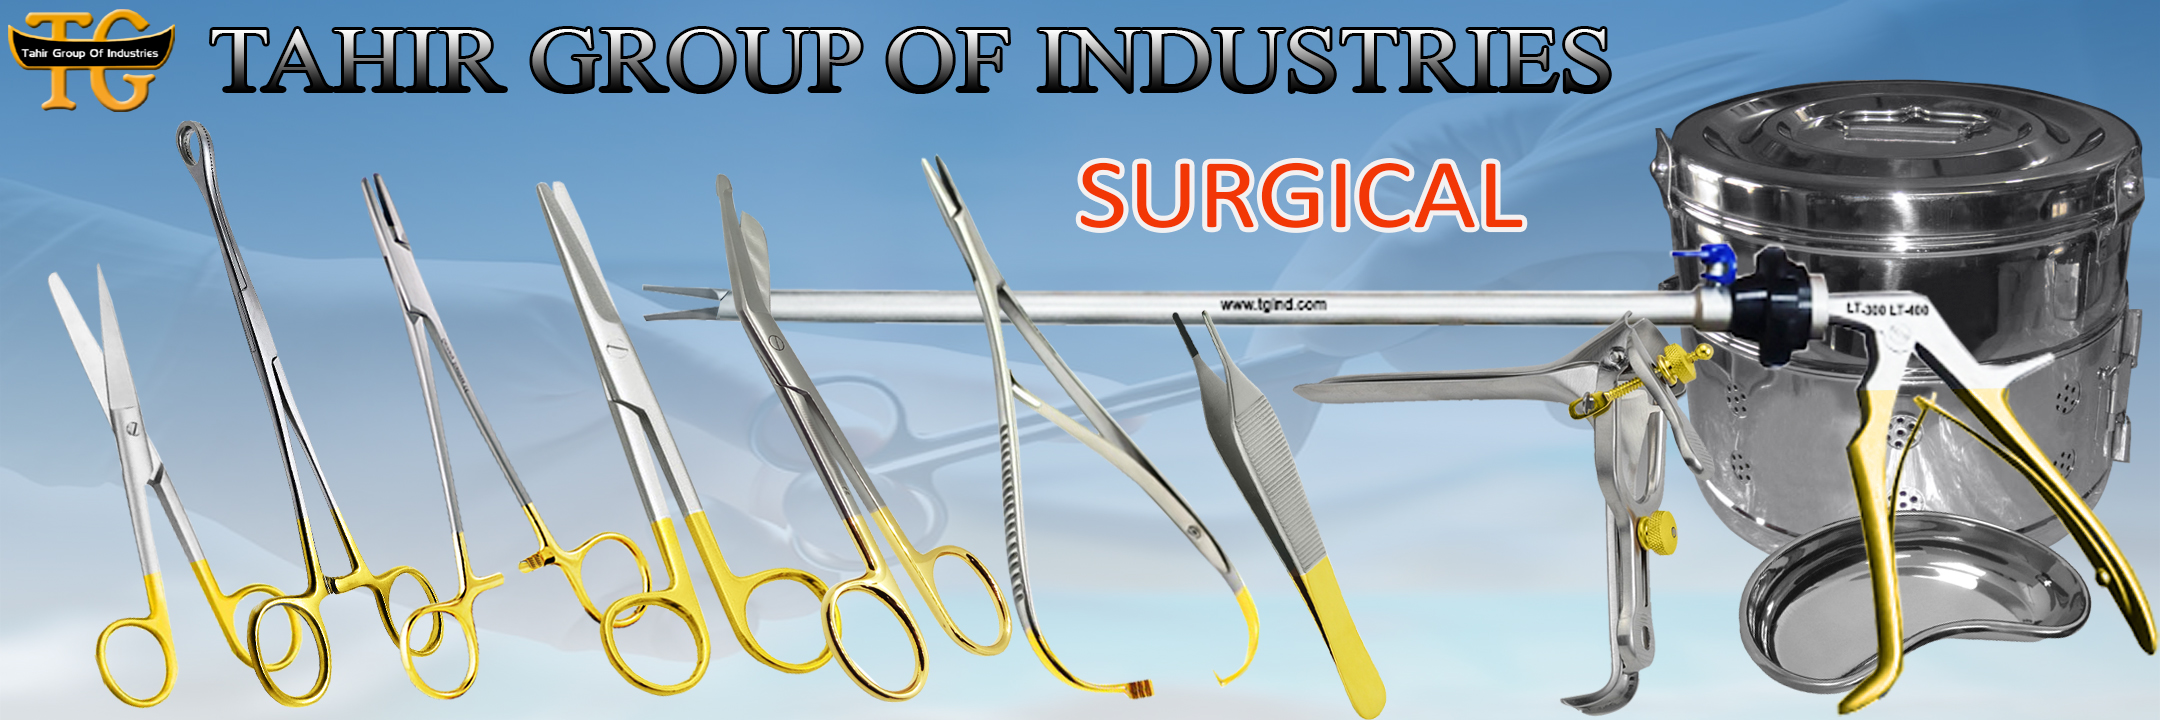 Denis Browne Abdominal Retractor Surgical Instruments 5 Pcs Set | eBay